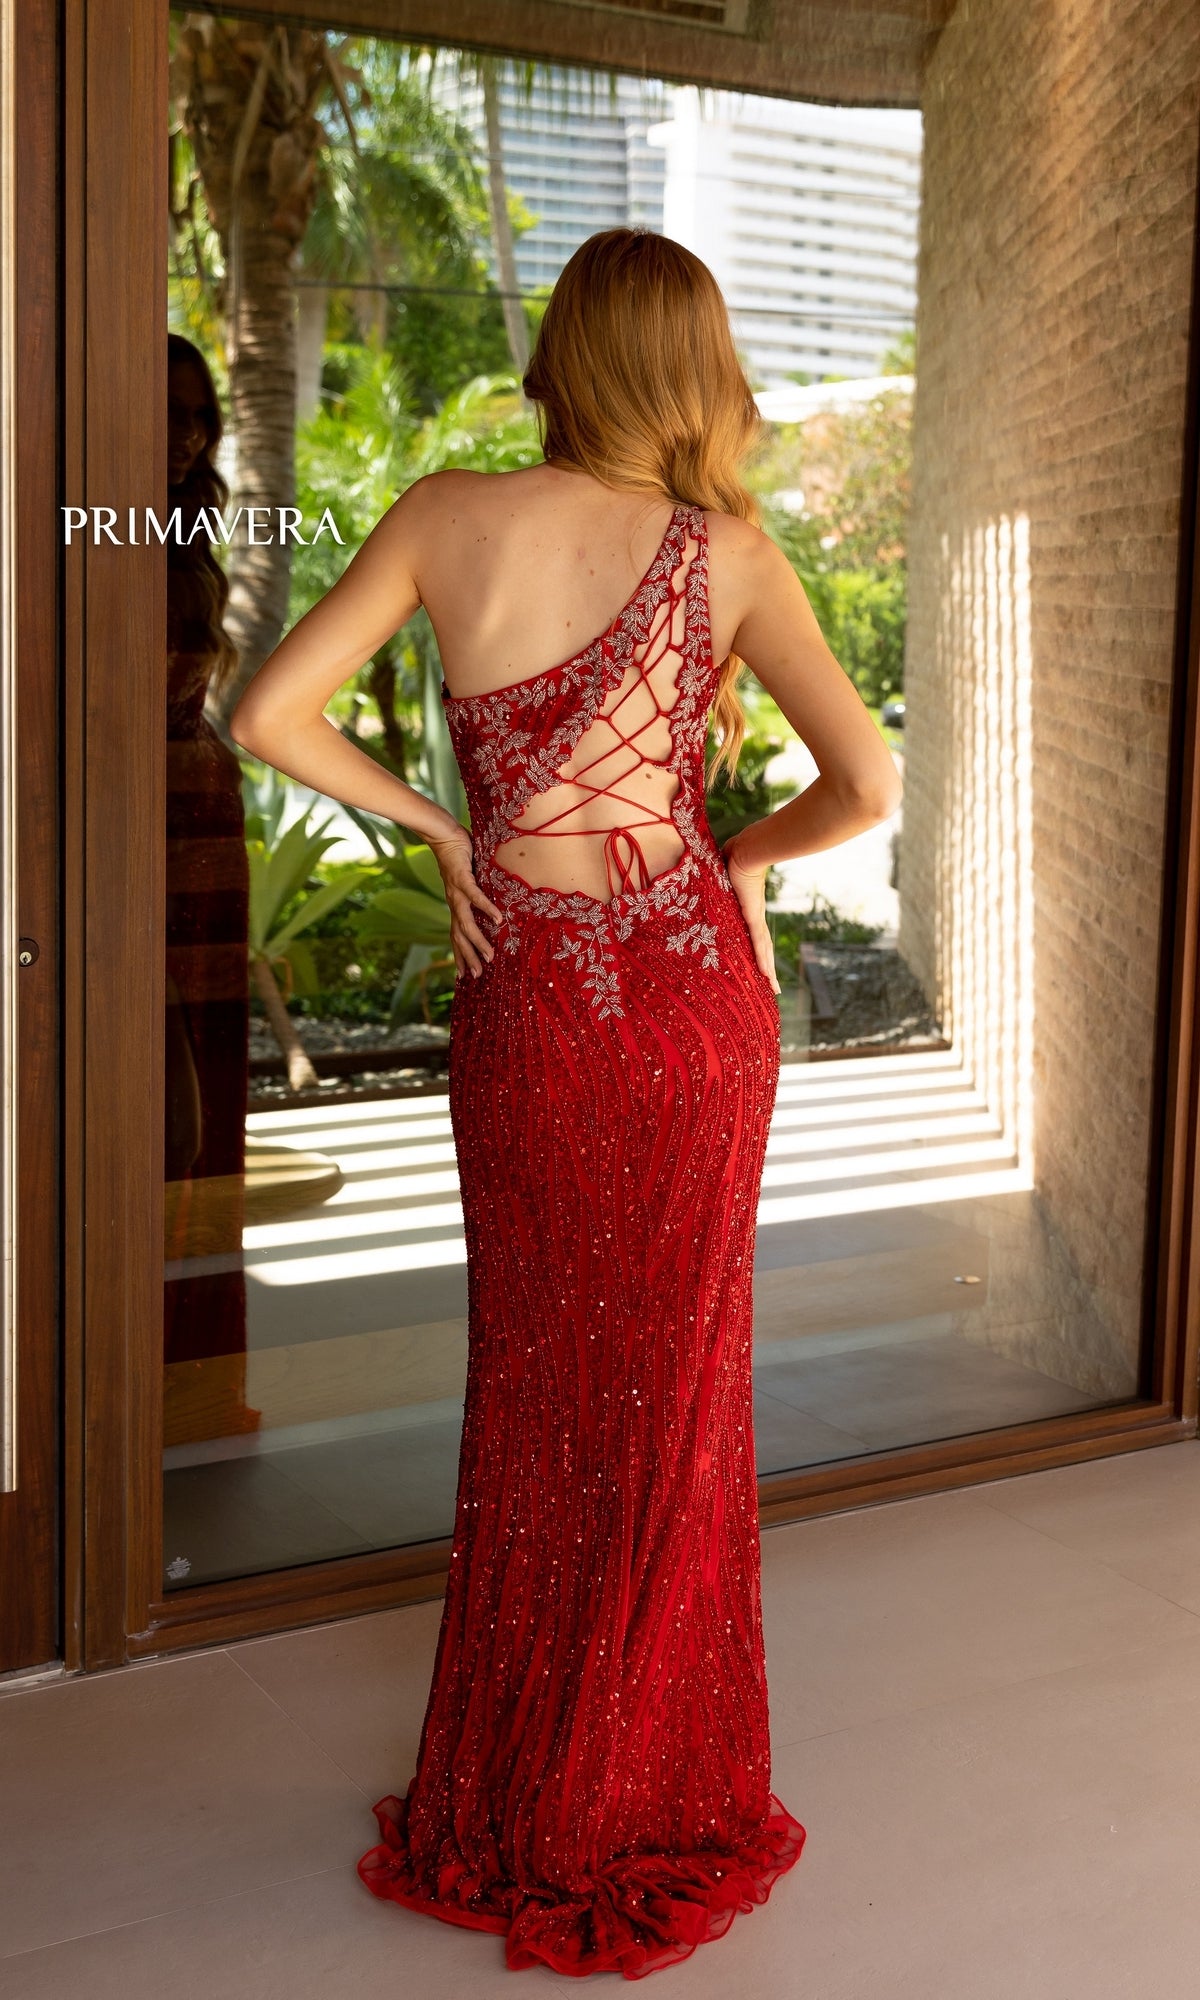 Primavera One-Shoulder Beaded Long Prom Dress 4144